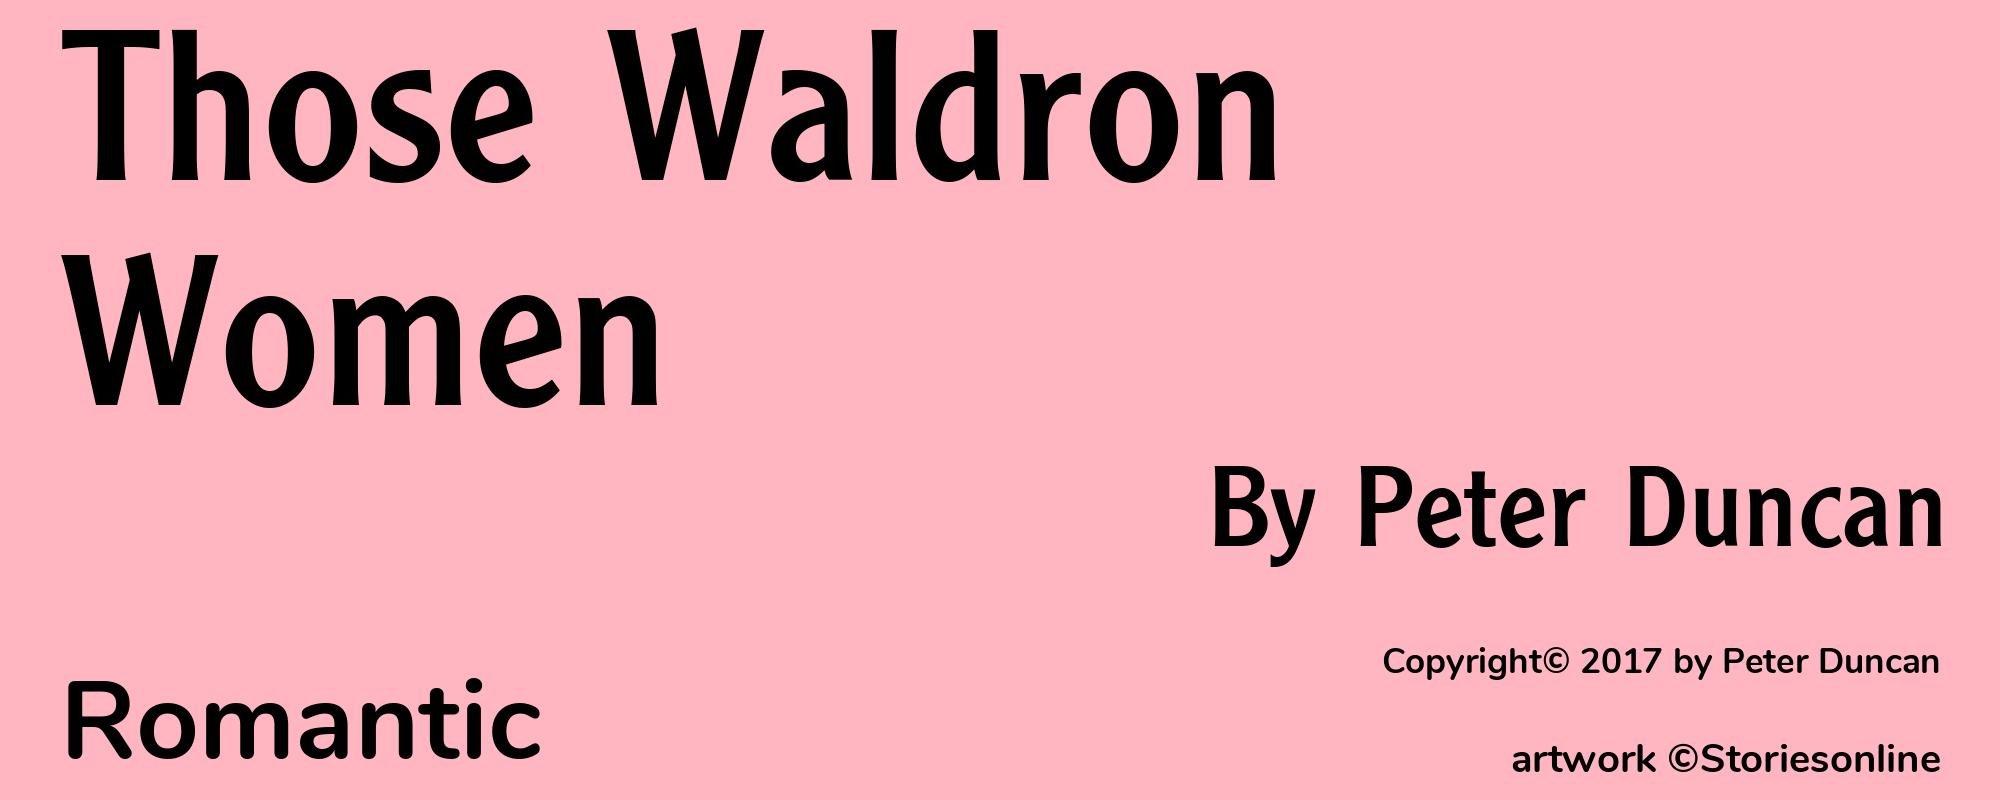 Those Waldron Women - Cover